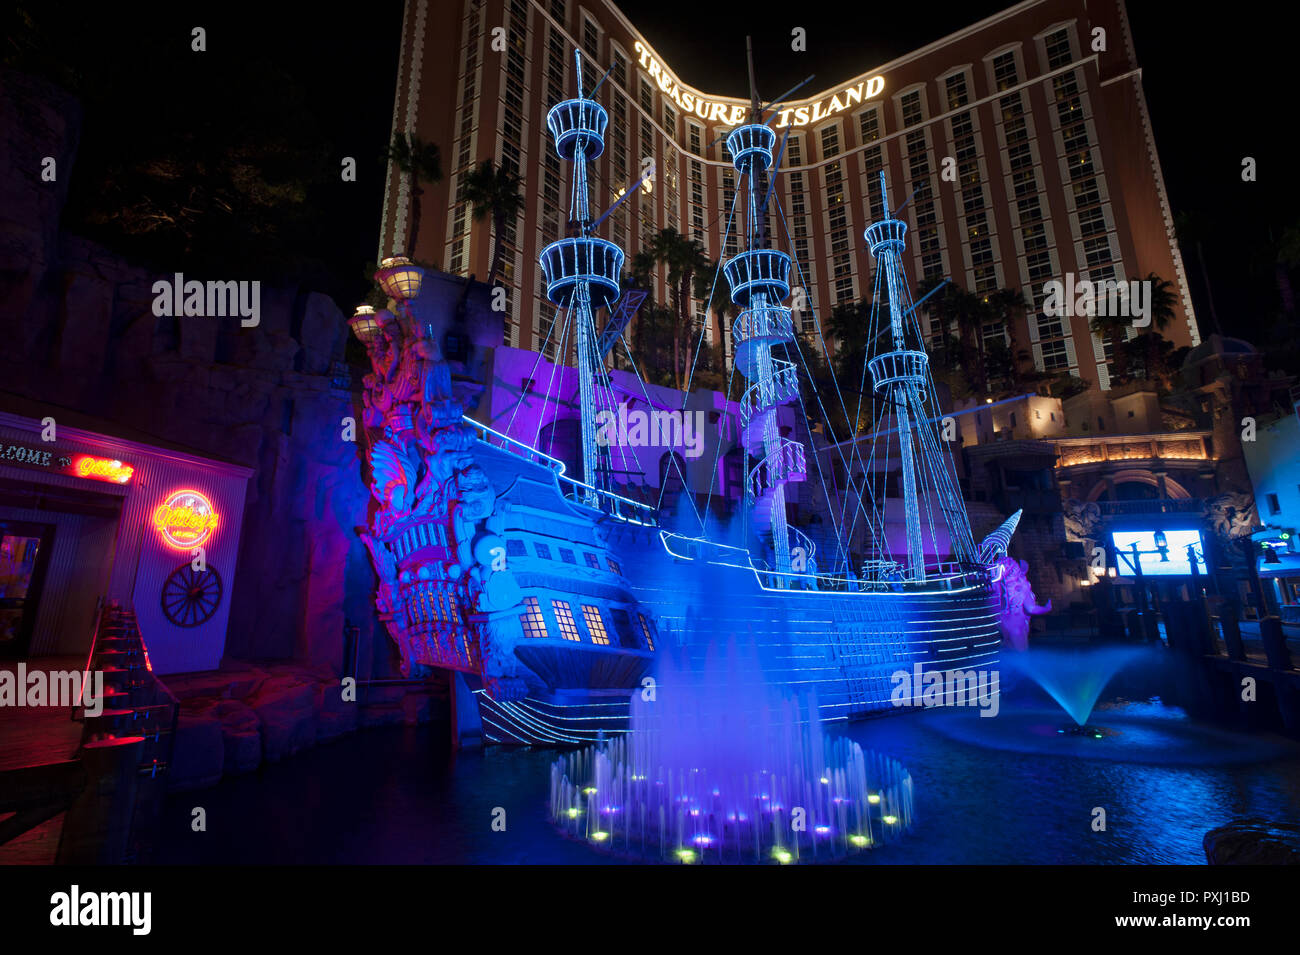 Illuminated pirate ship at Treasure Island Hotel and Casino, Las Vegas, Nevada, USA. Stock Photo